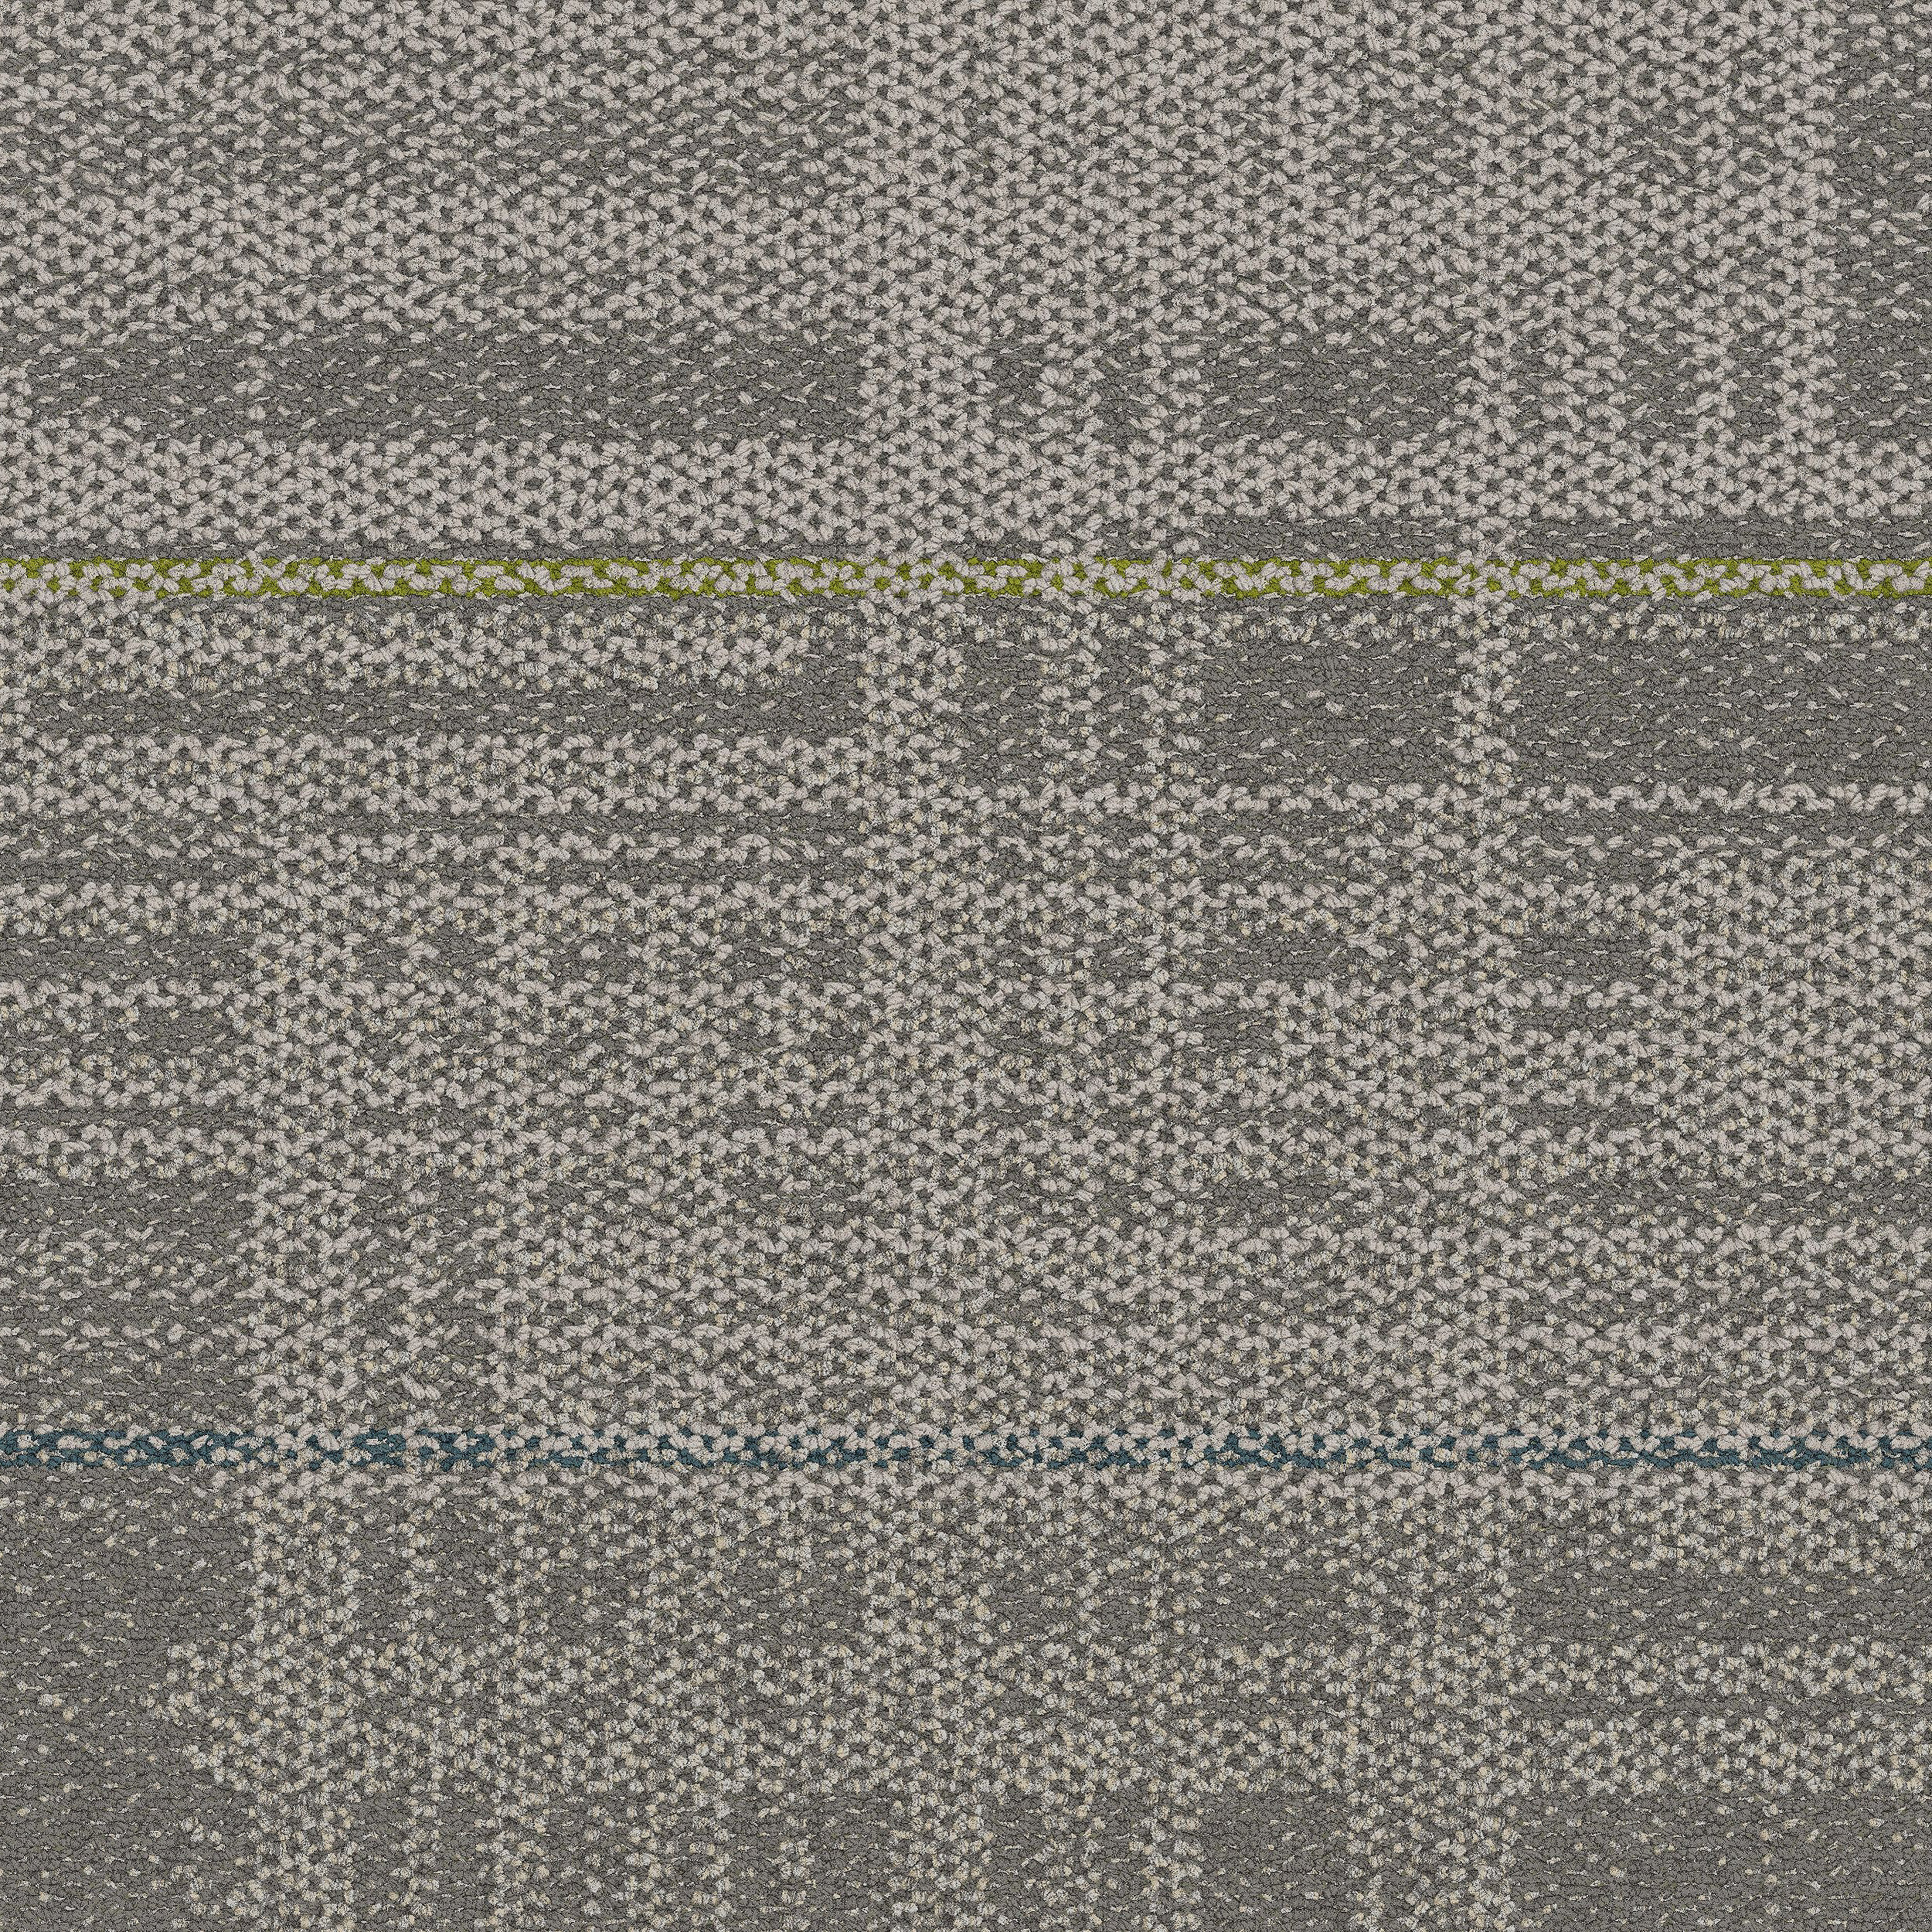 AE312 Carpet Tile In Fog/Accent image number 10